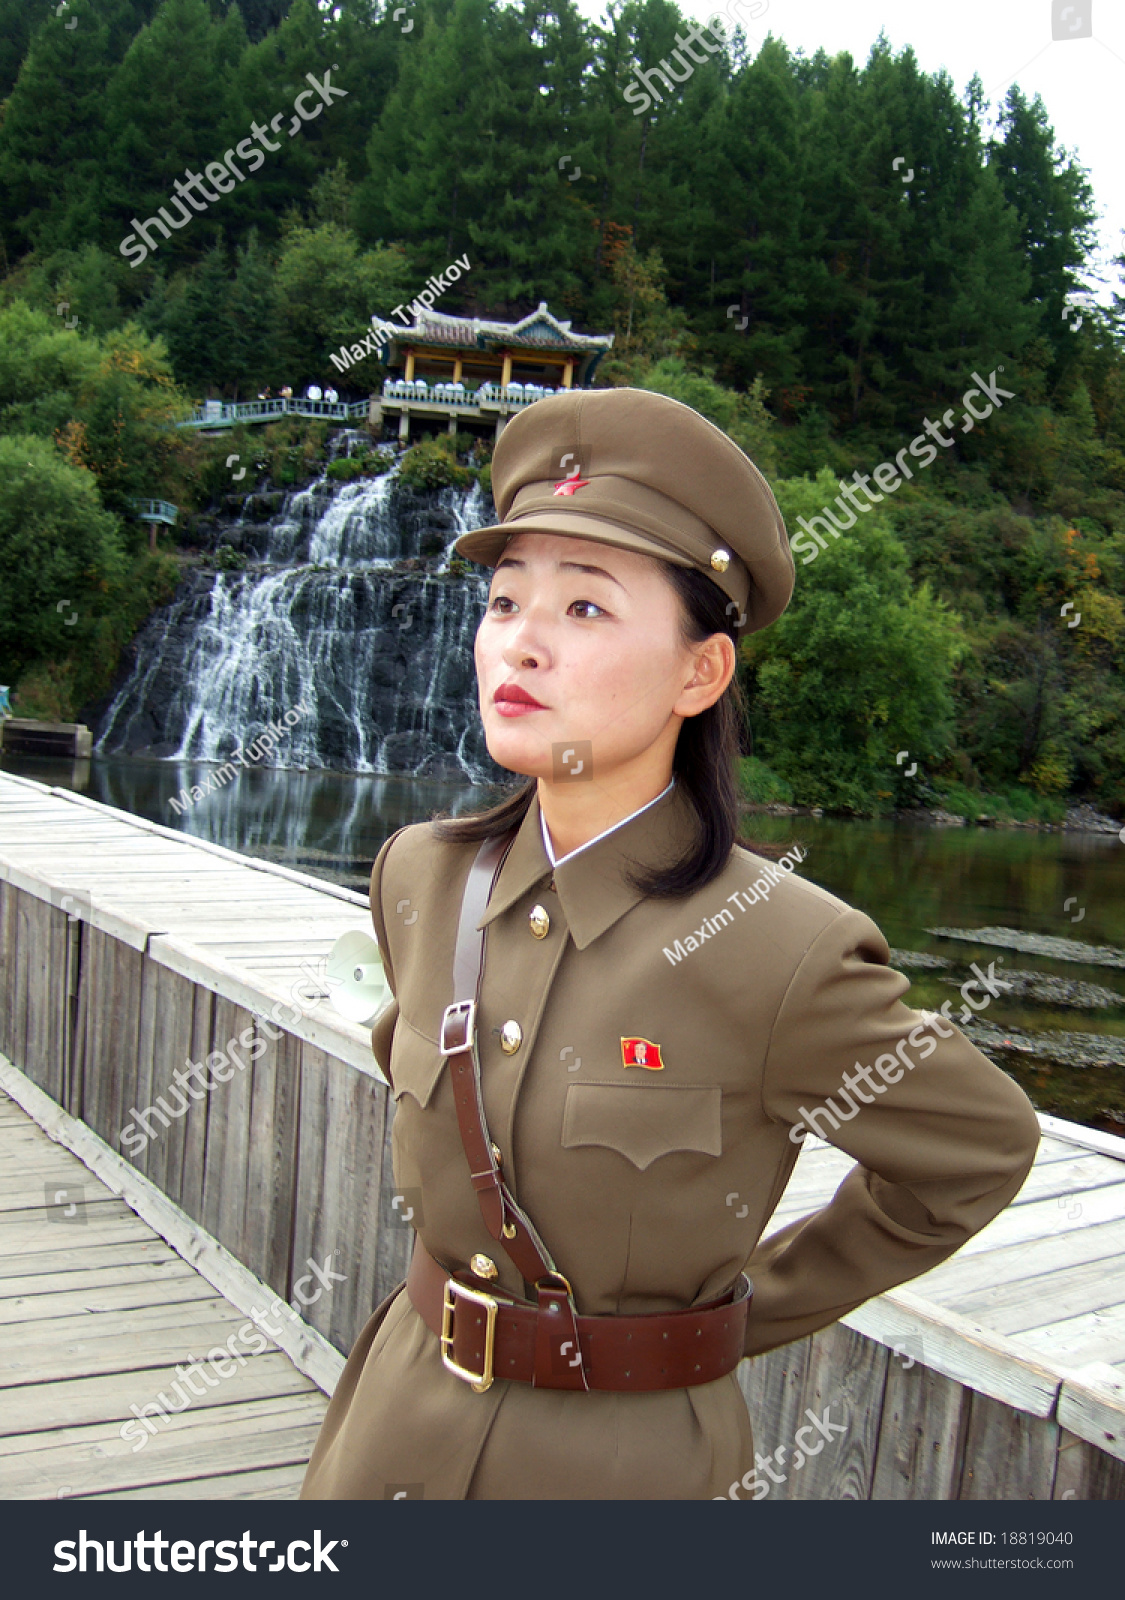 Svaki dan neka ratna obljetnica, a uz nju odmah i misa - Page 3 Stock-photo-paktusan-september-north-korean-military-woman-guard-at-the-outpost-near-paktusan-mountain-18819040